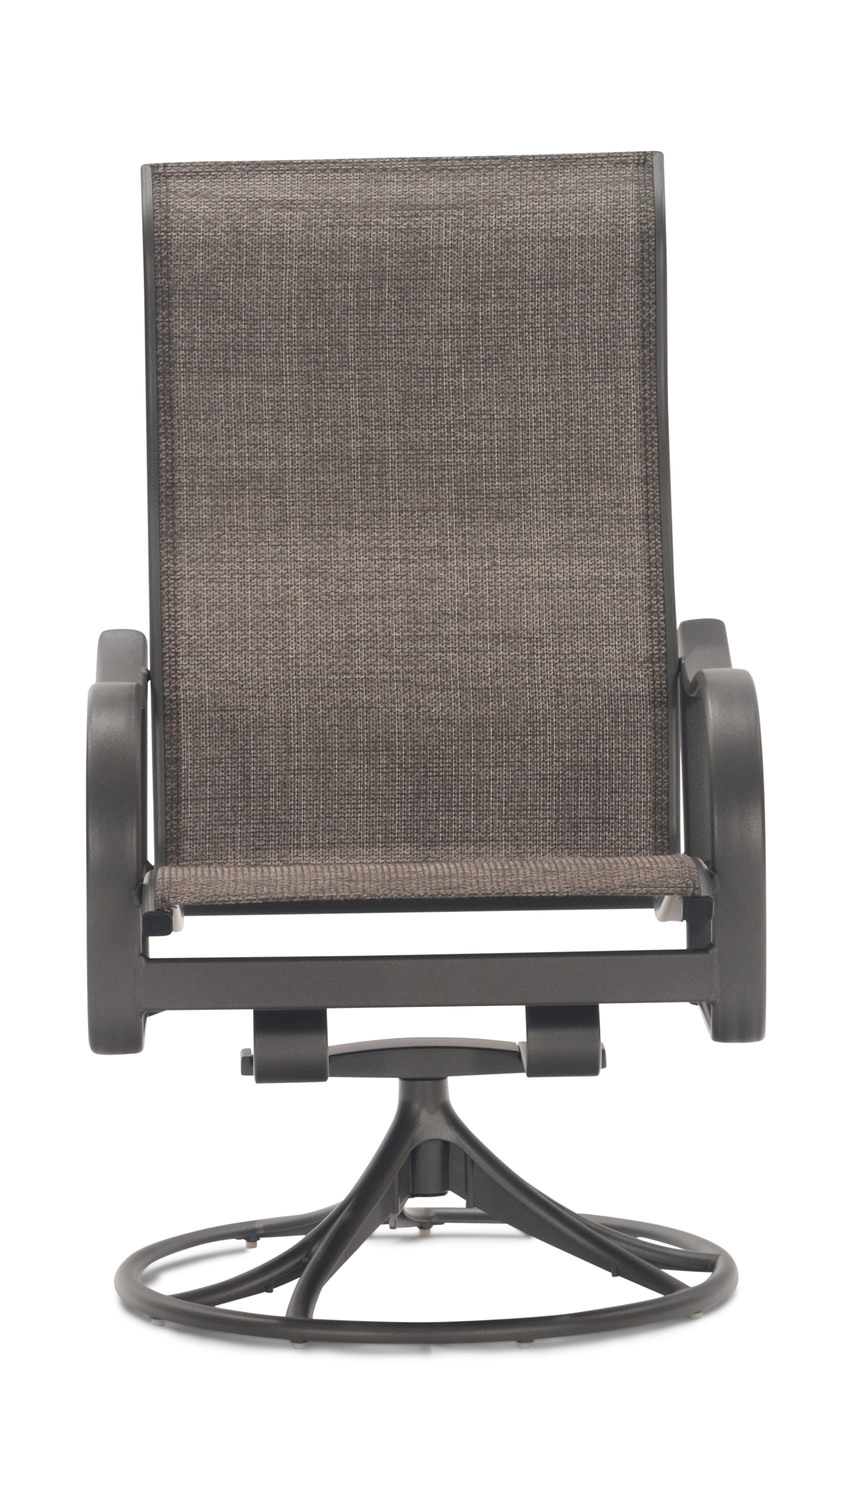 Shoreline Swivel Rocker Chair - Graphite